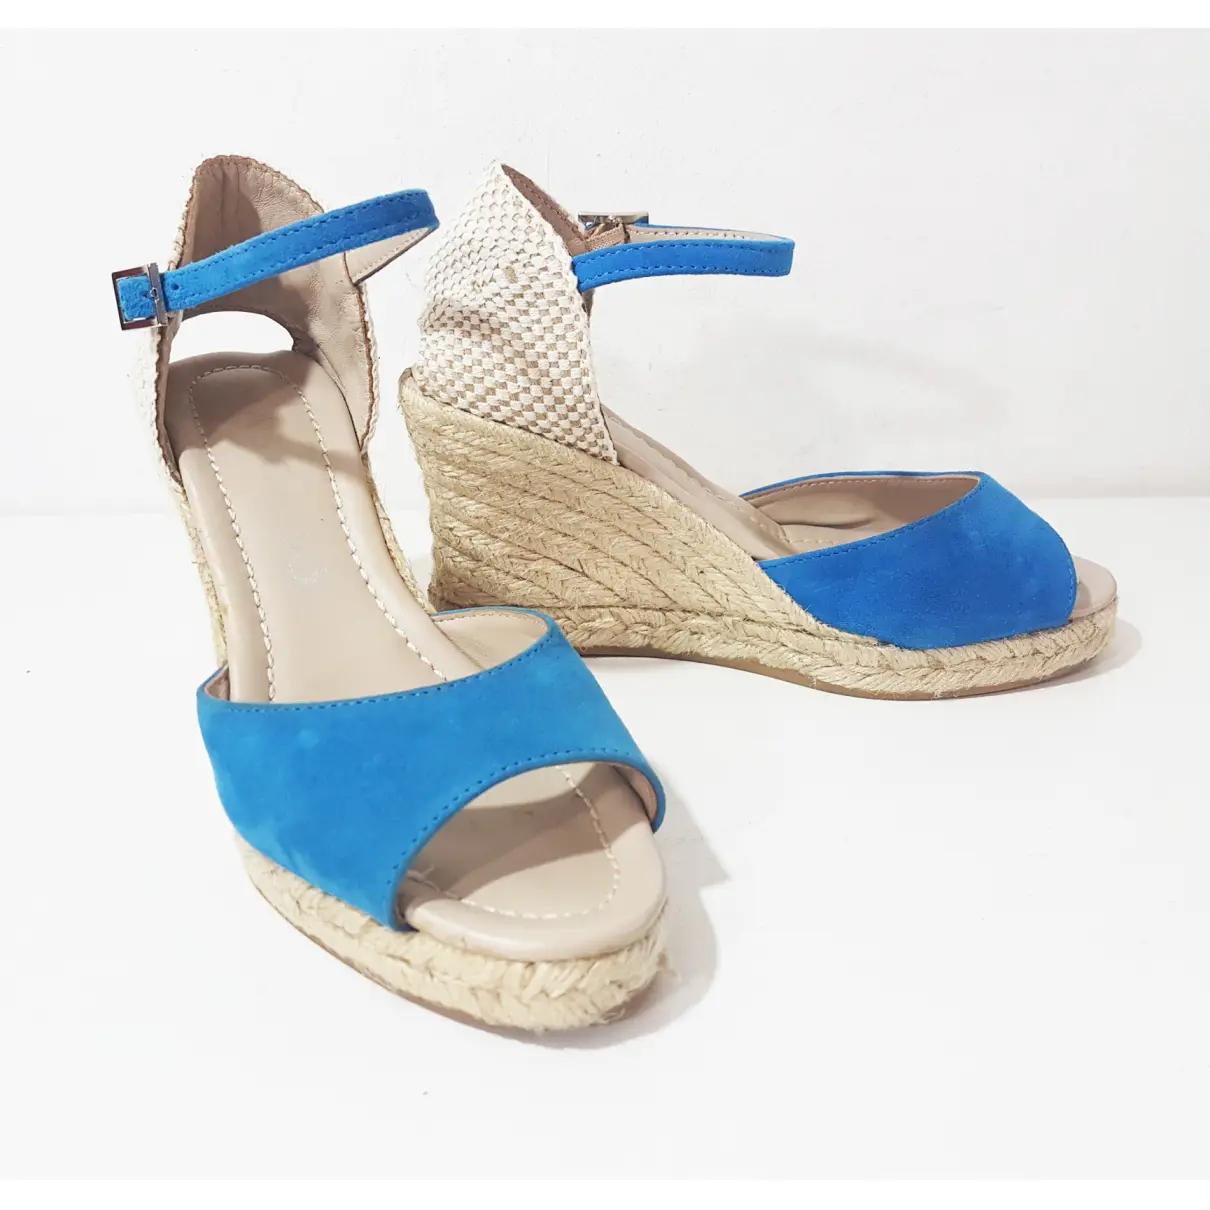 Buy Jaime Mascaro Sandals online